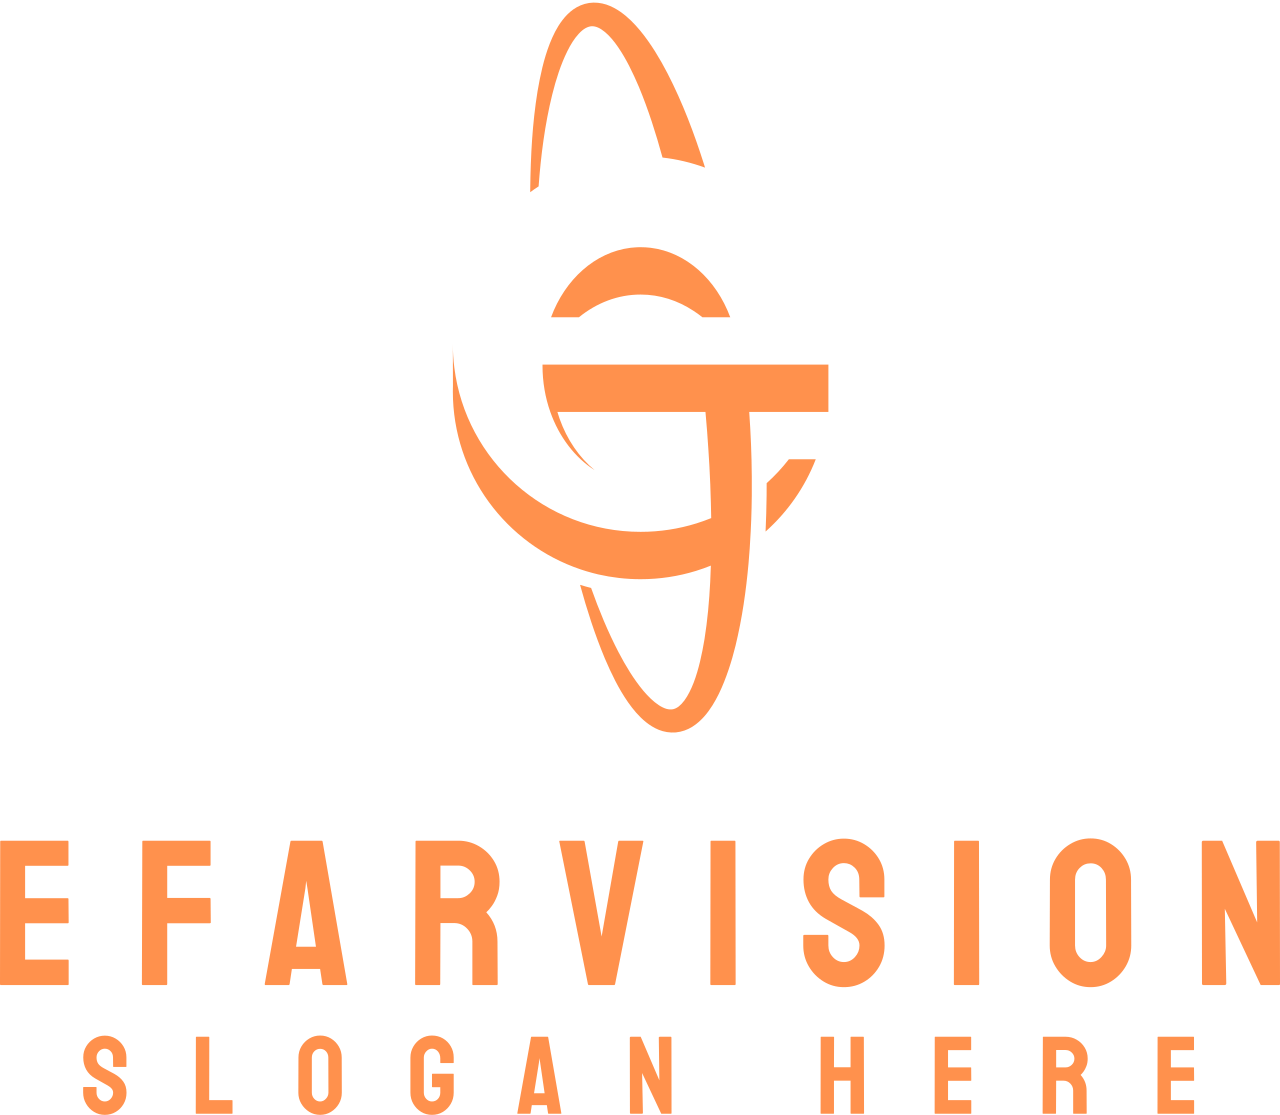 efarvision's logo